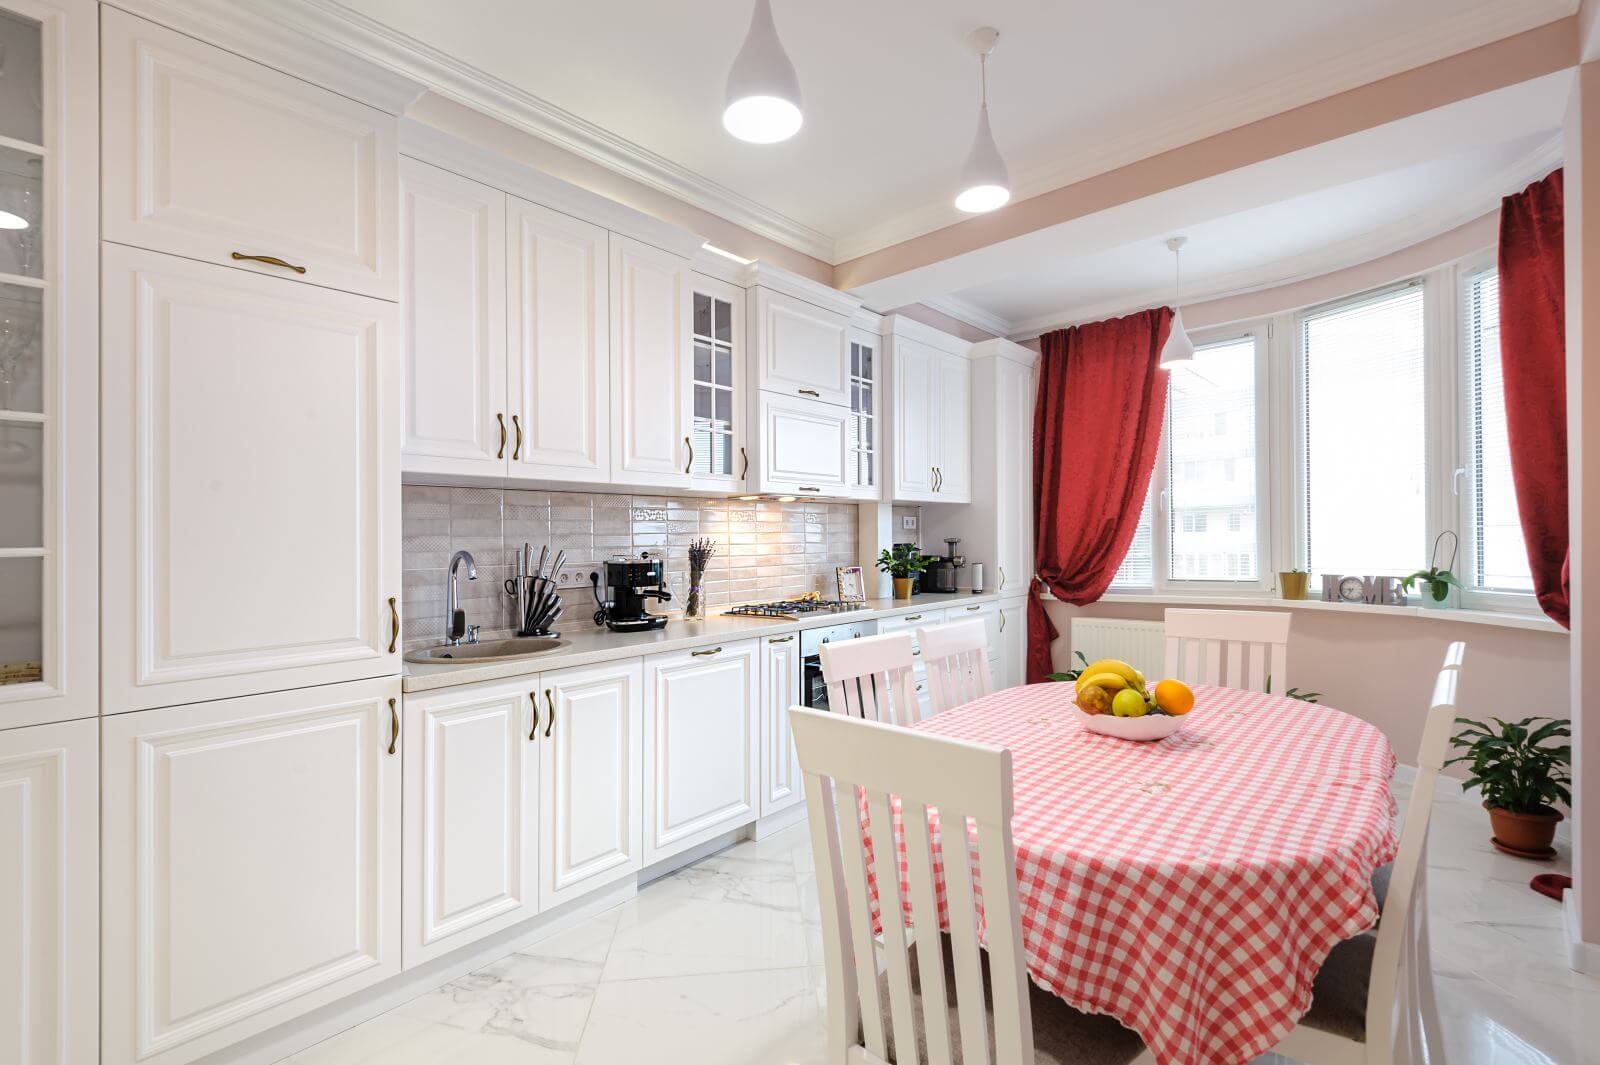 Luxury and simple modern white kitchen interior